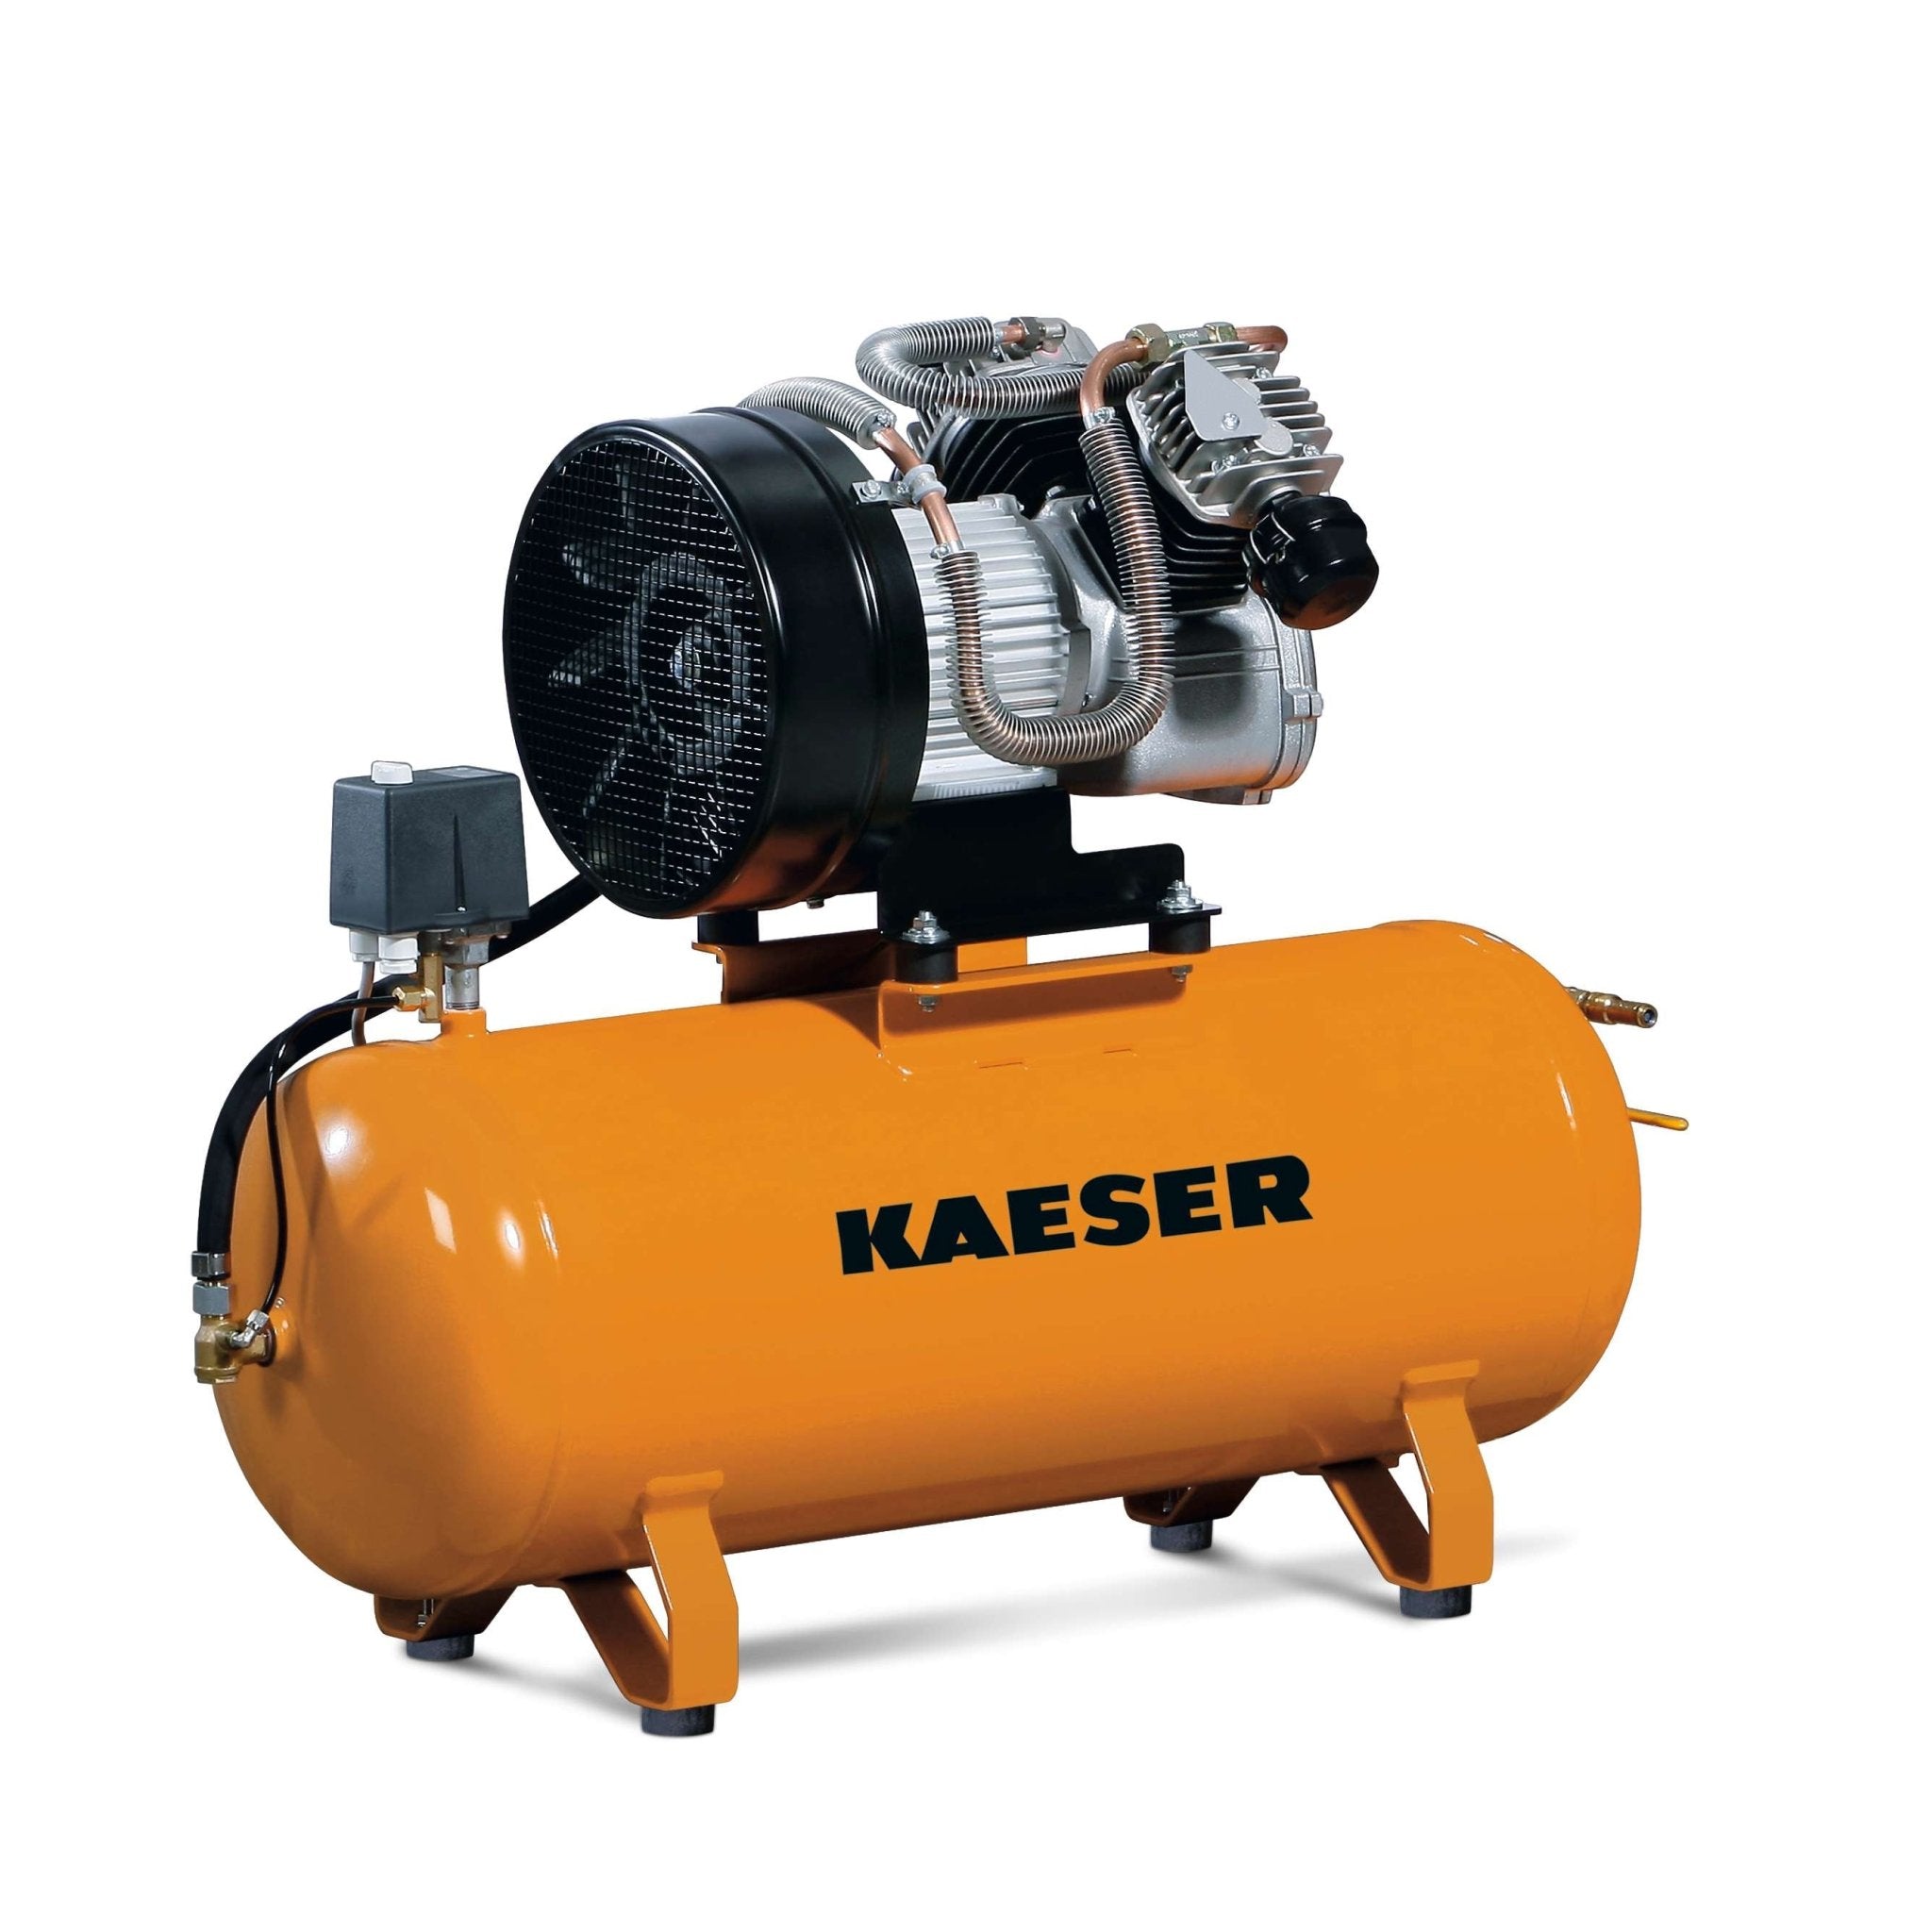 Kaeser piston compressor EPC 440-100 400/3/50